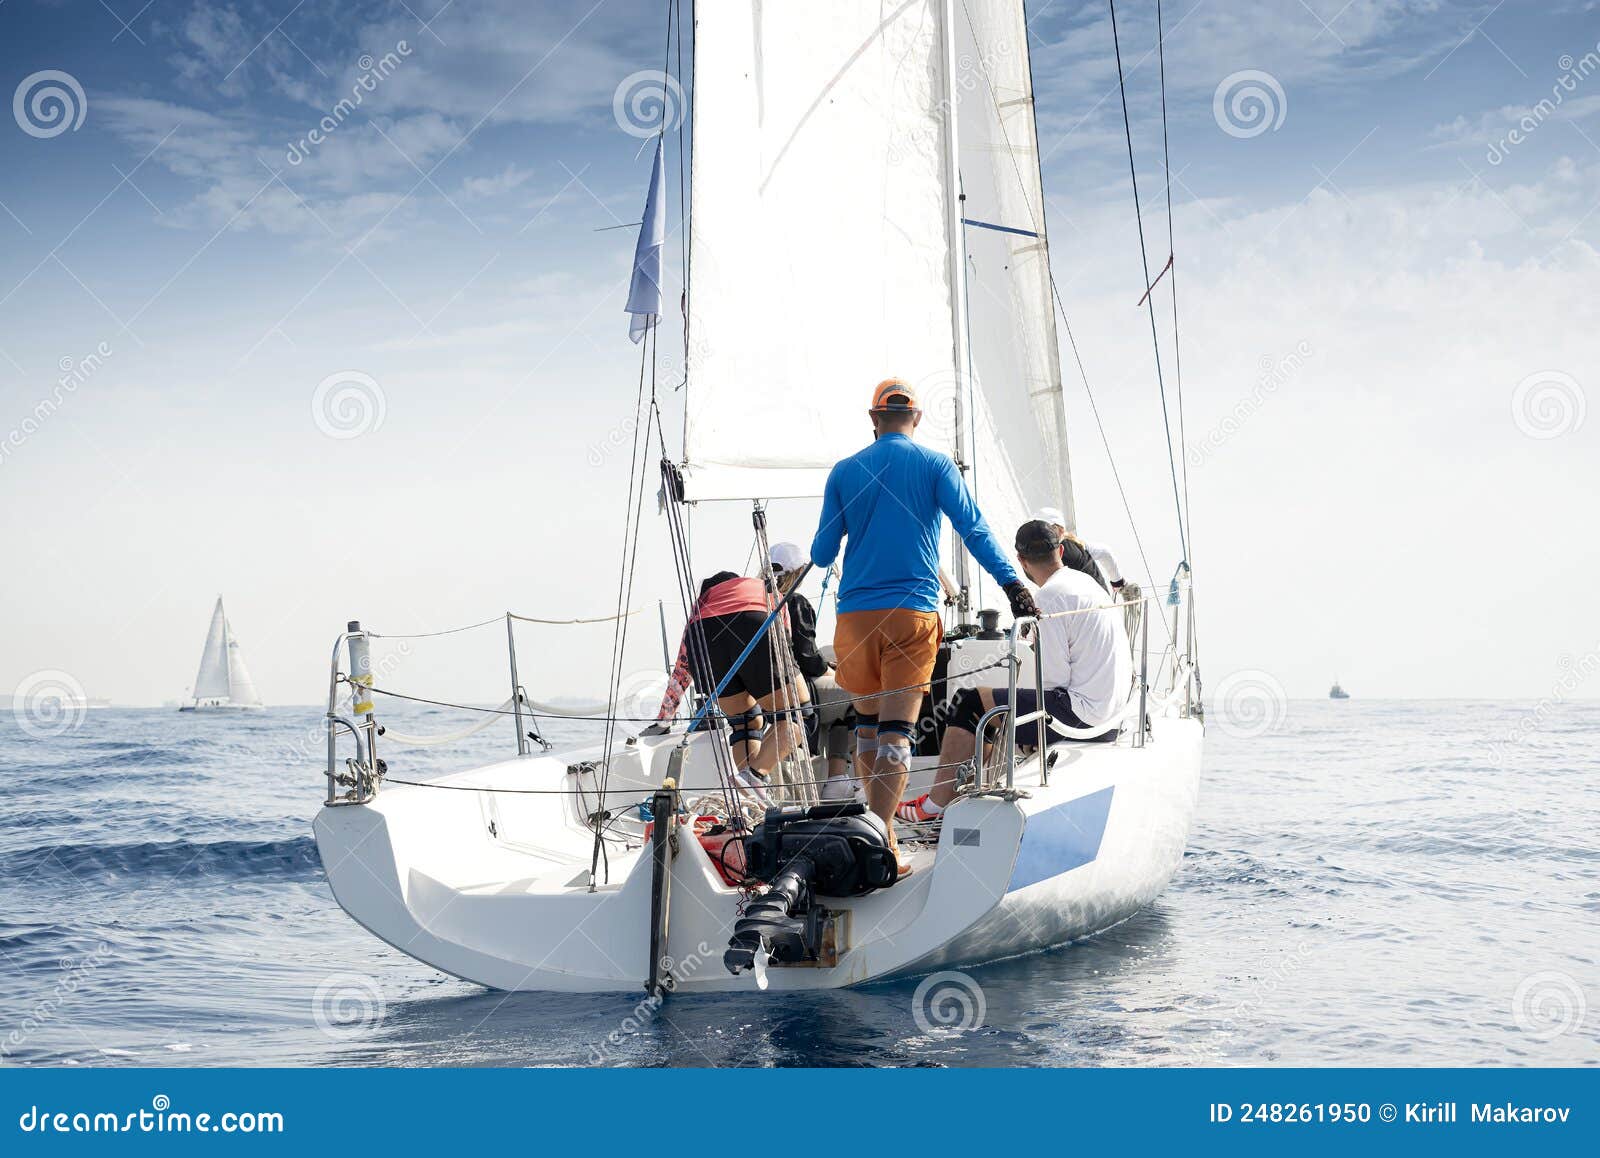 crew on sailboat